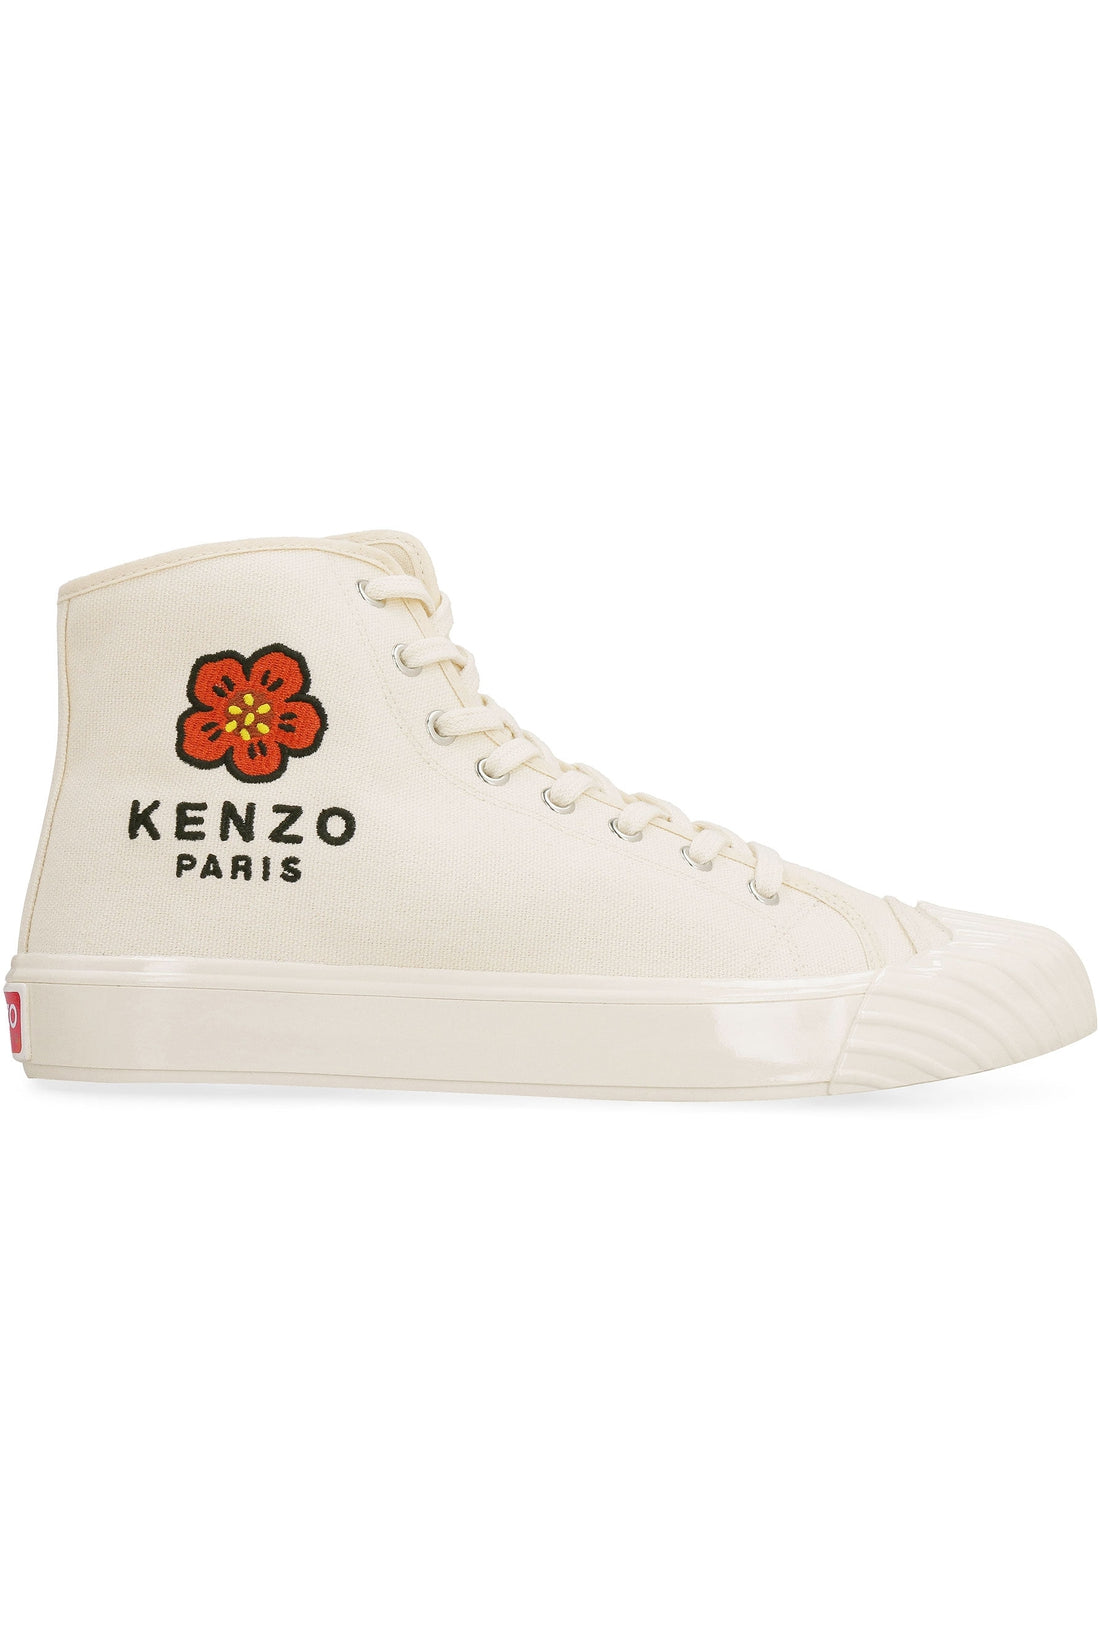 Kenzo-OUTLET-SALE-KENZOSCHOOL high-top sneakers-ARCHIVIST